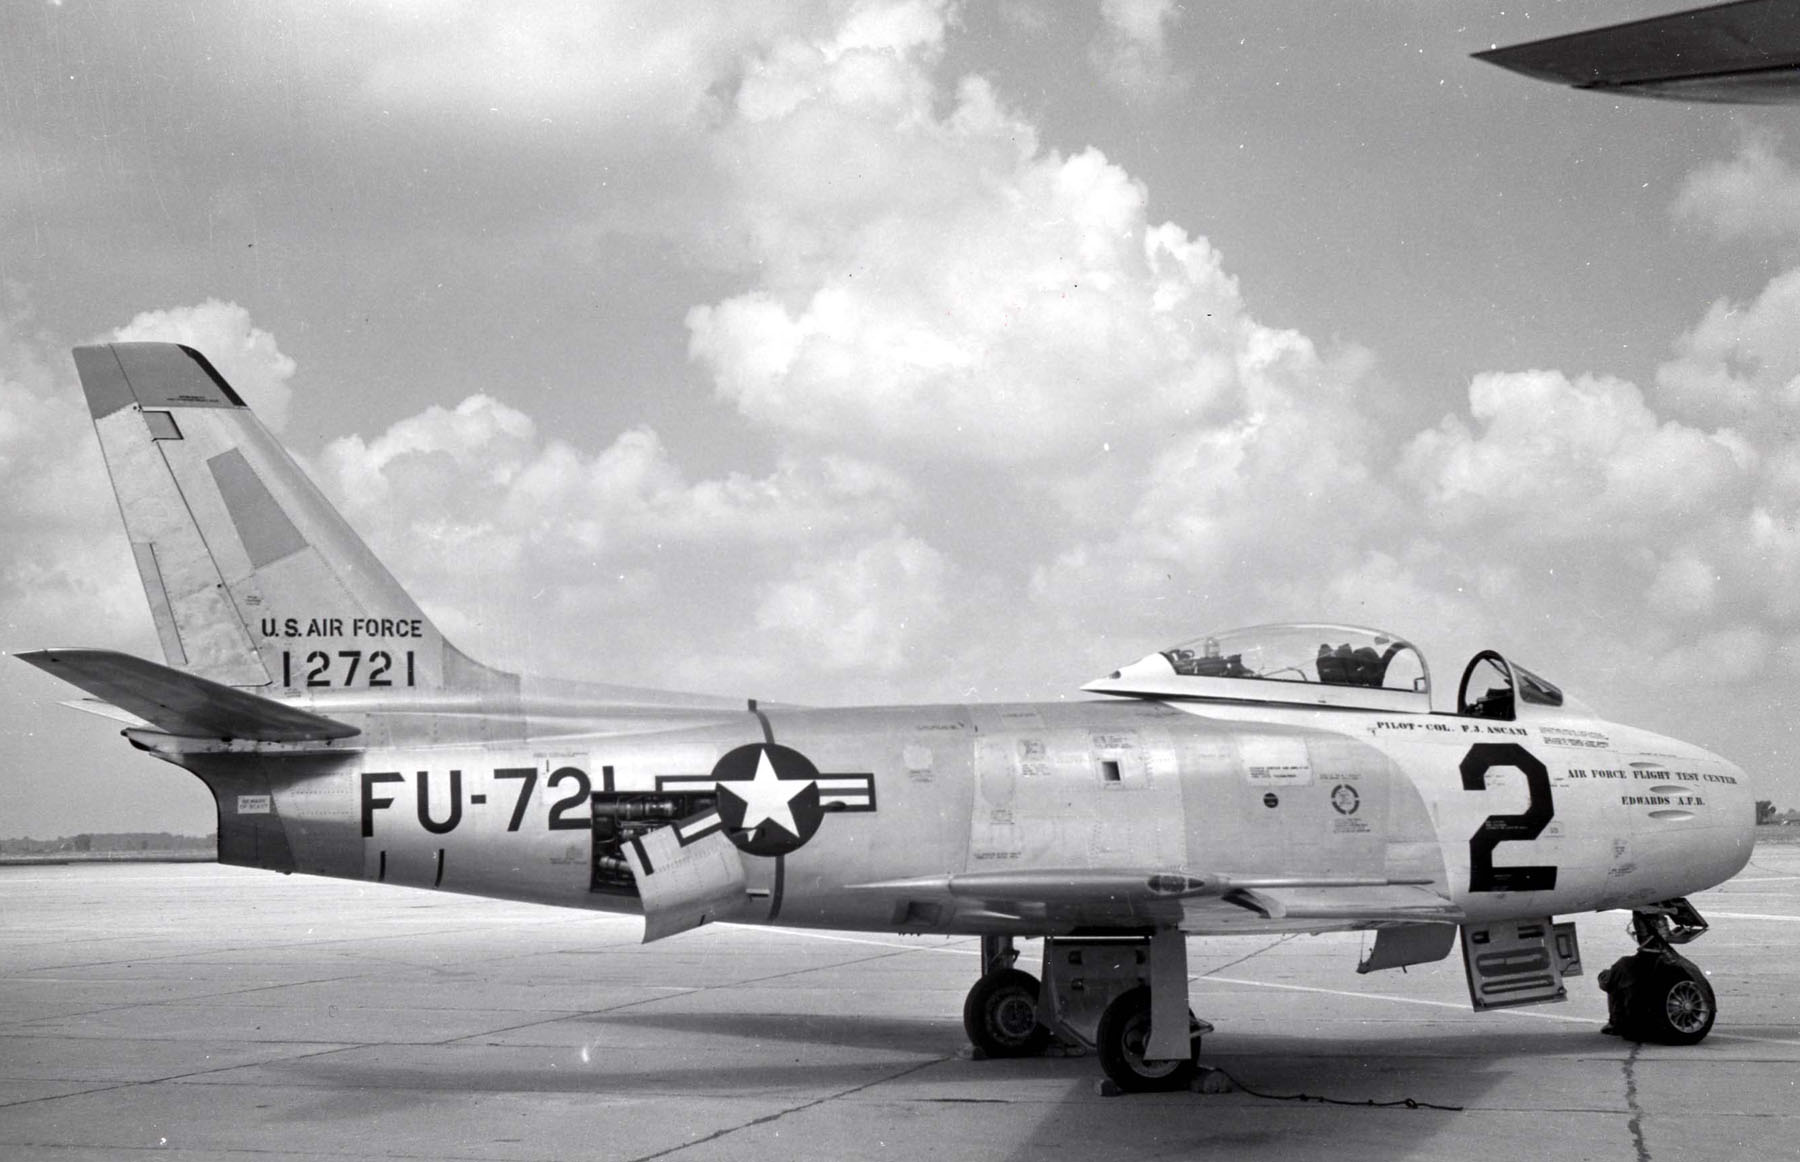 North American Aviation F-86E-10-NA Sabre 51-2721. (U.S. Air Force)